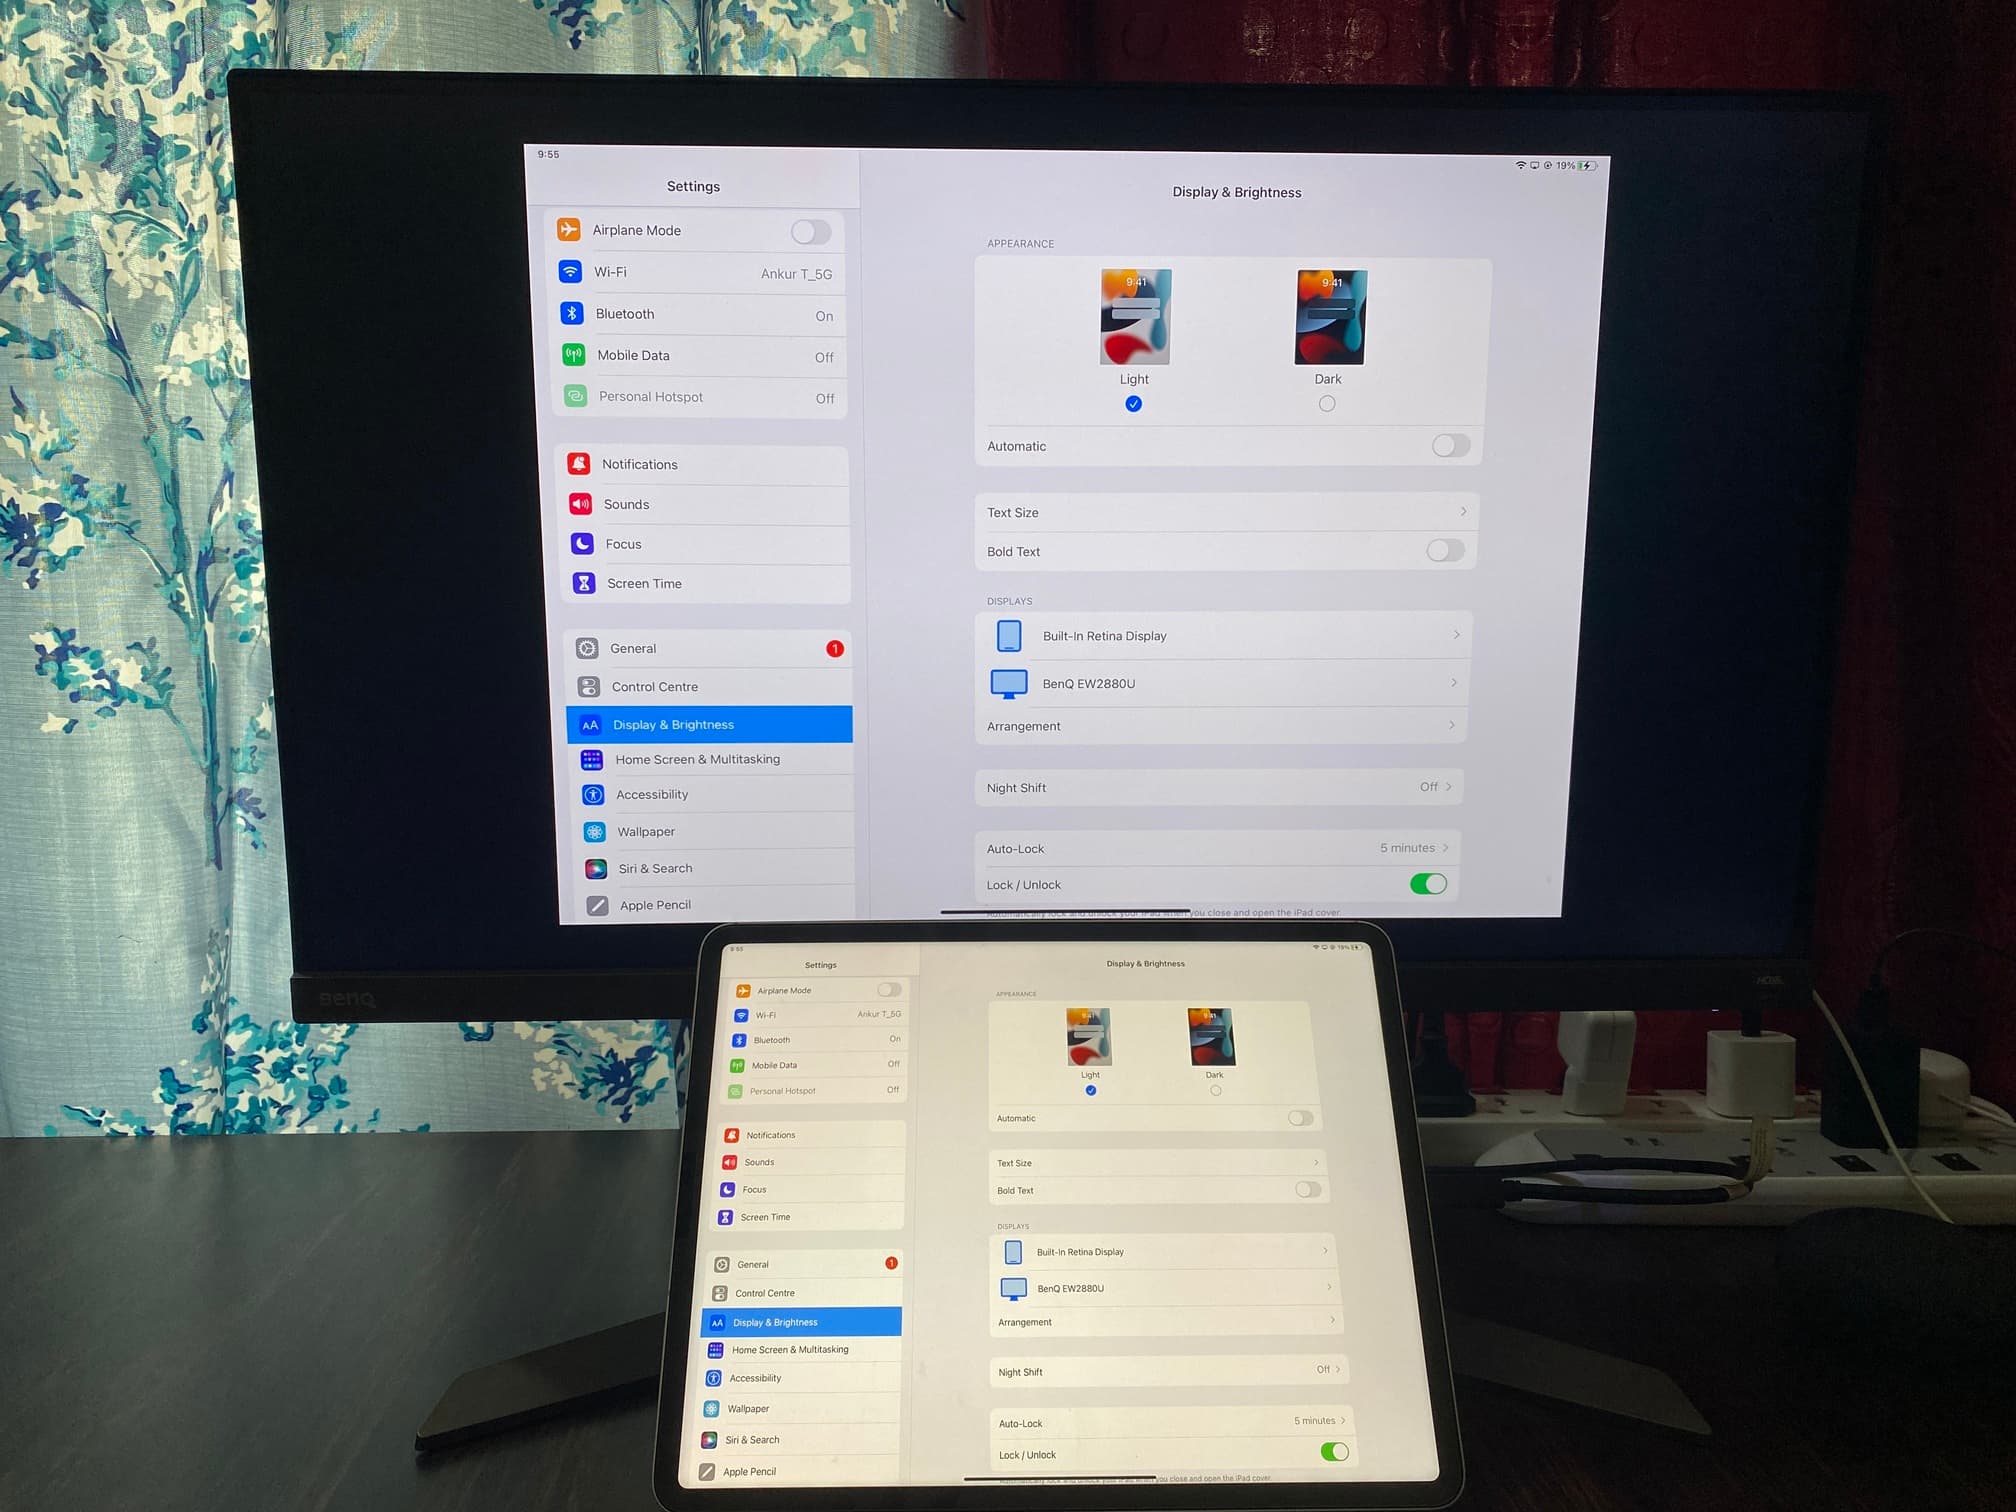 iPad screen mirroring to a computer display